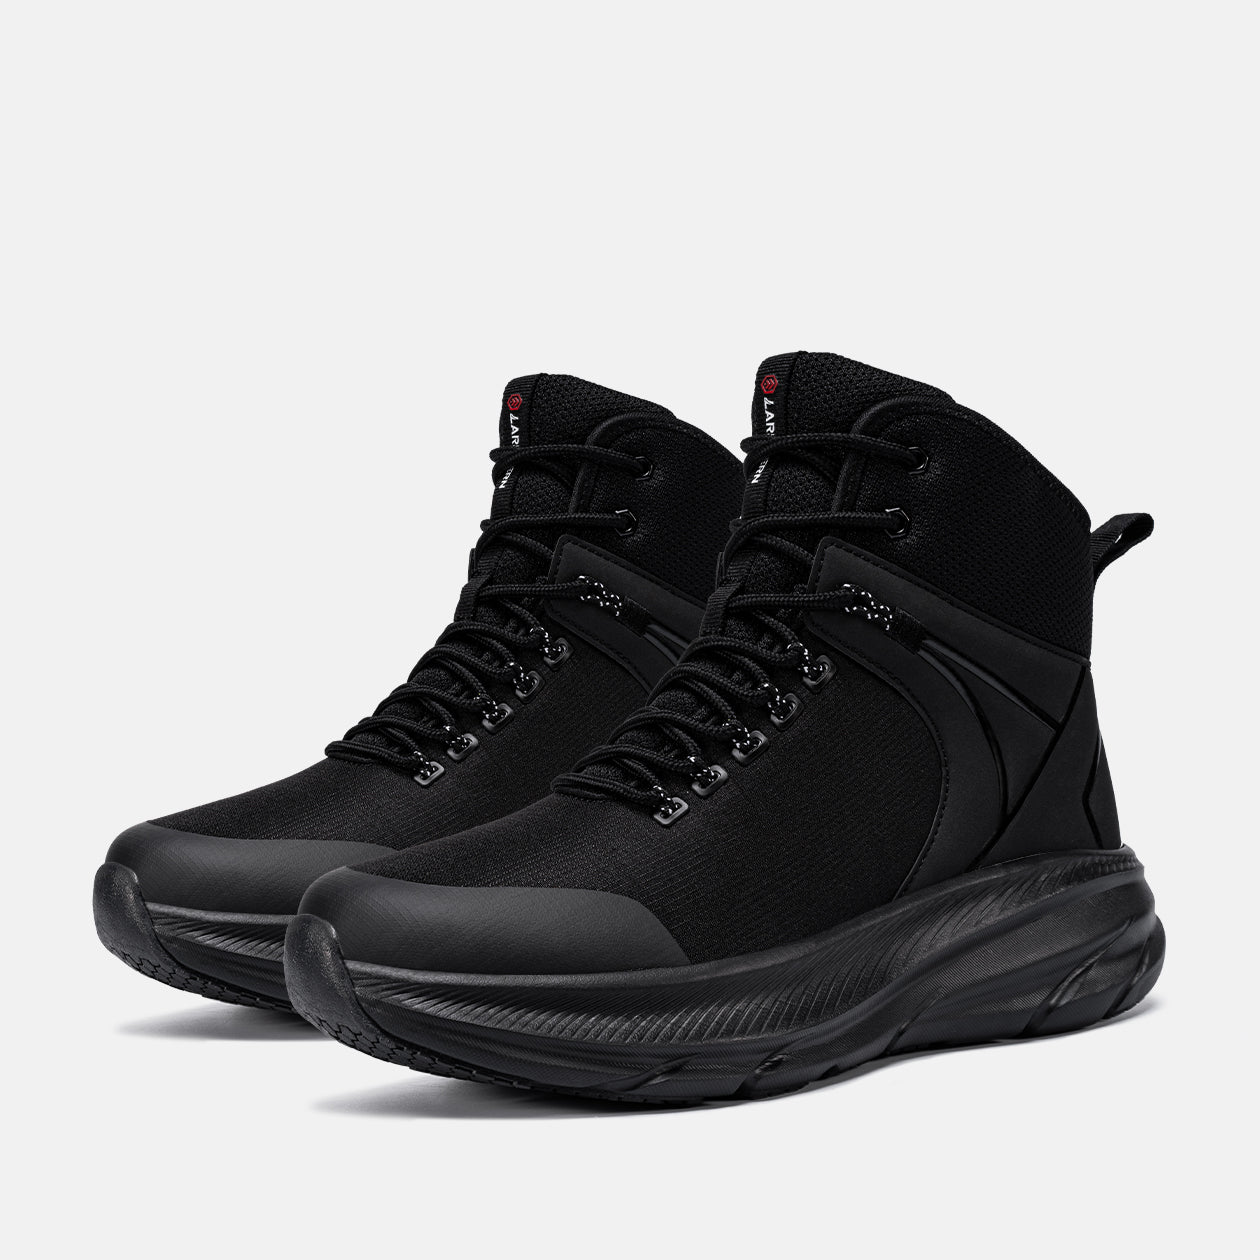 Larnmern Waterproof Work Boots Slip Resistant Shoes For Men,#31333